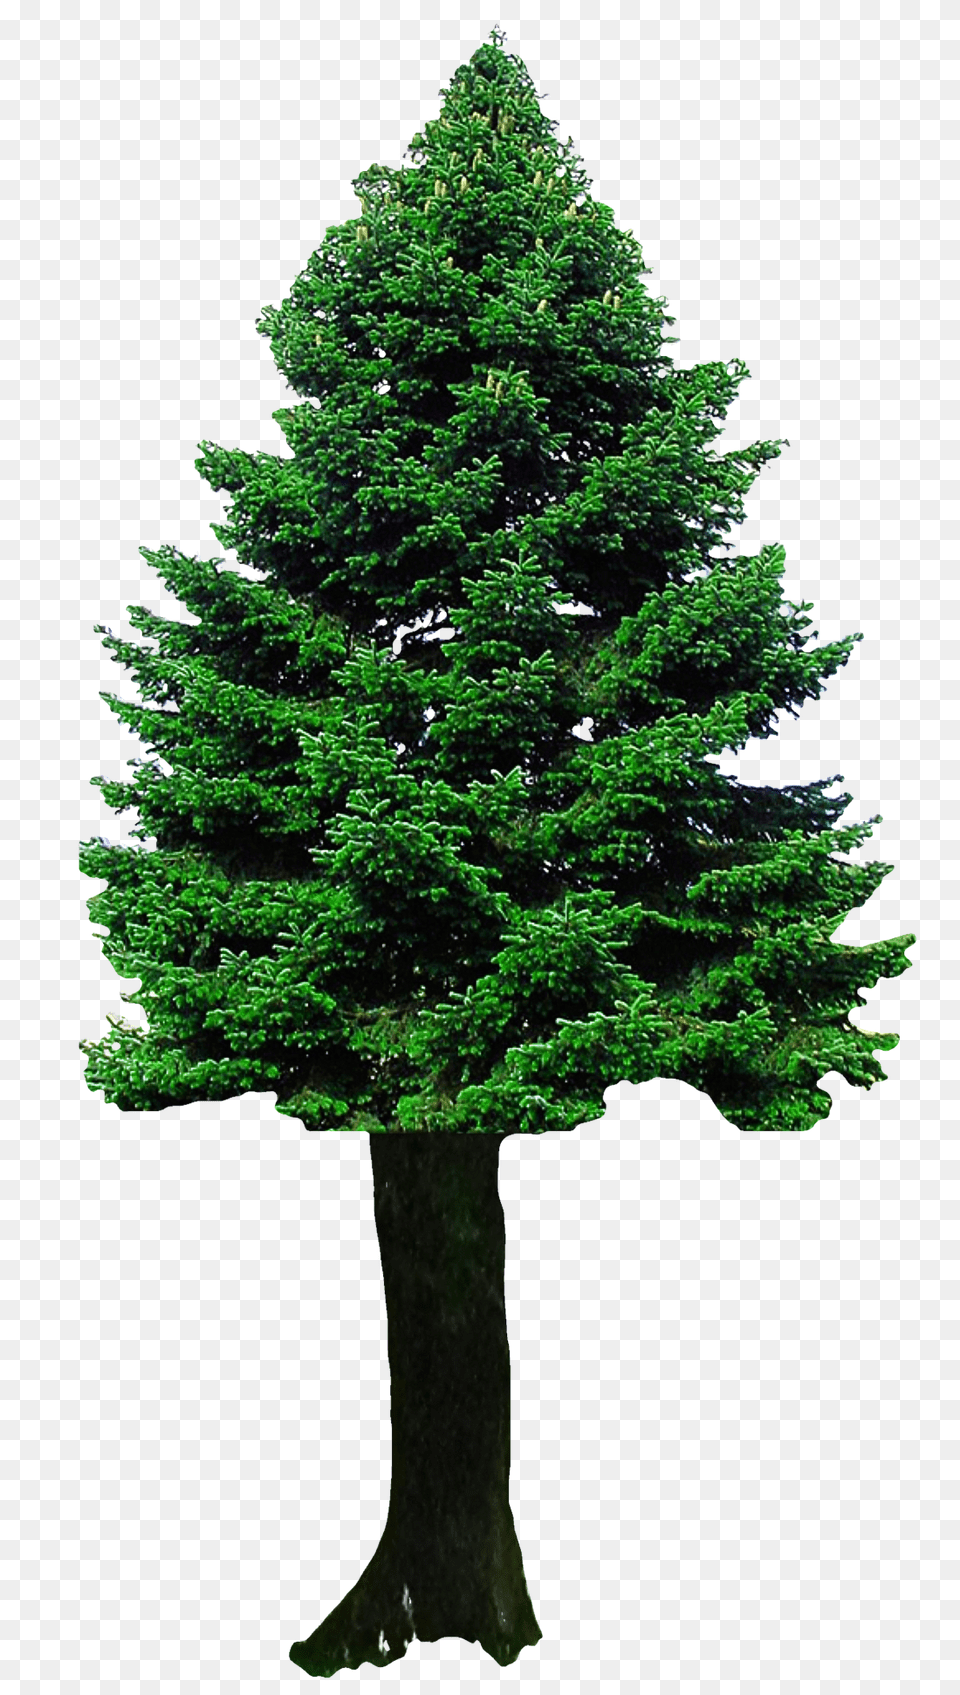 Pngpix Com Christmas Tree Transparent Image, Fir, Pine, Plant, Conifer Png